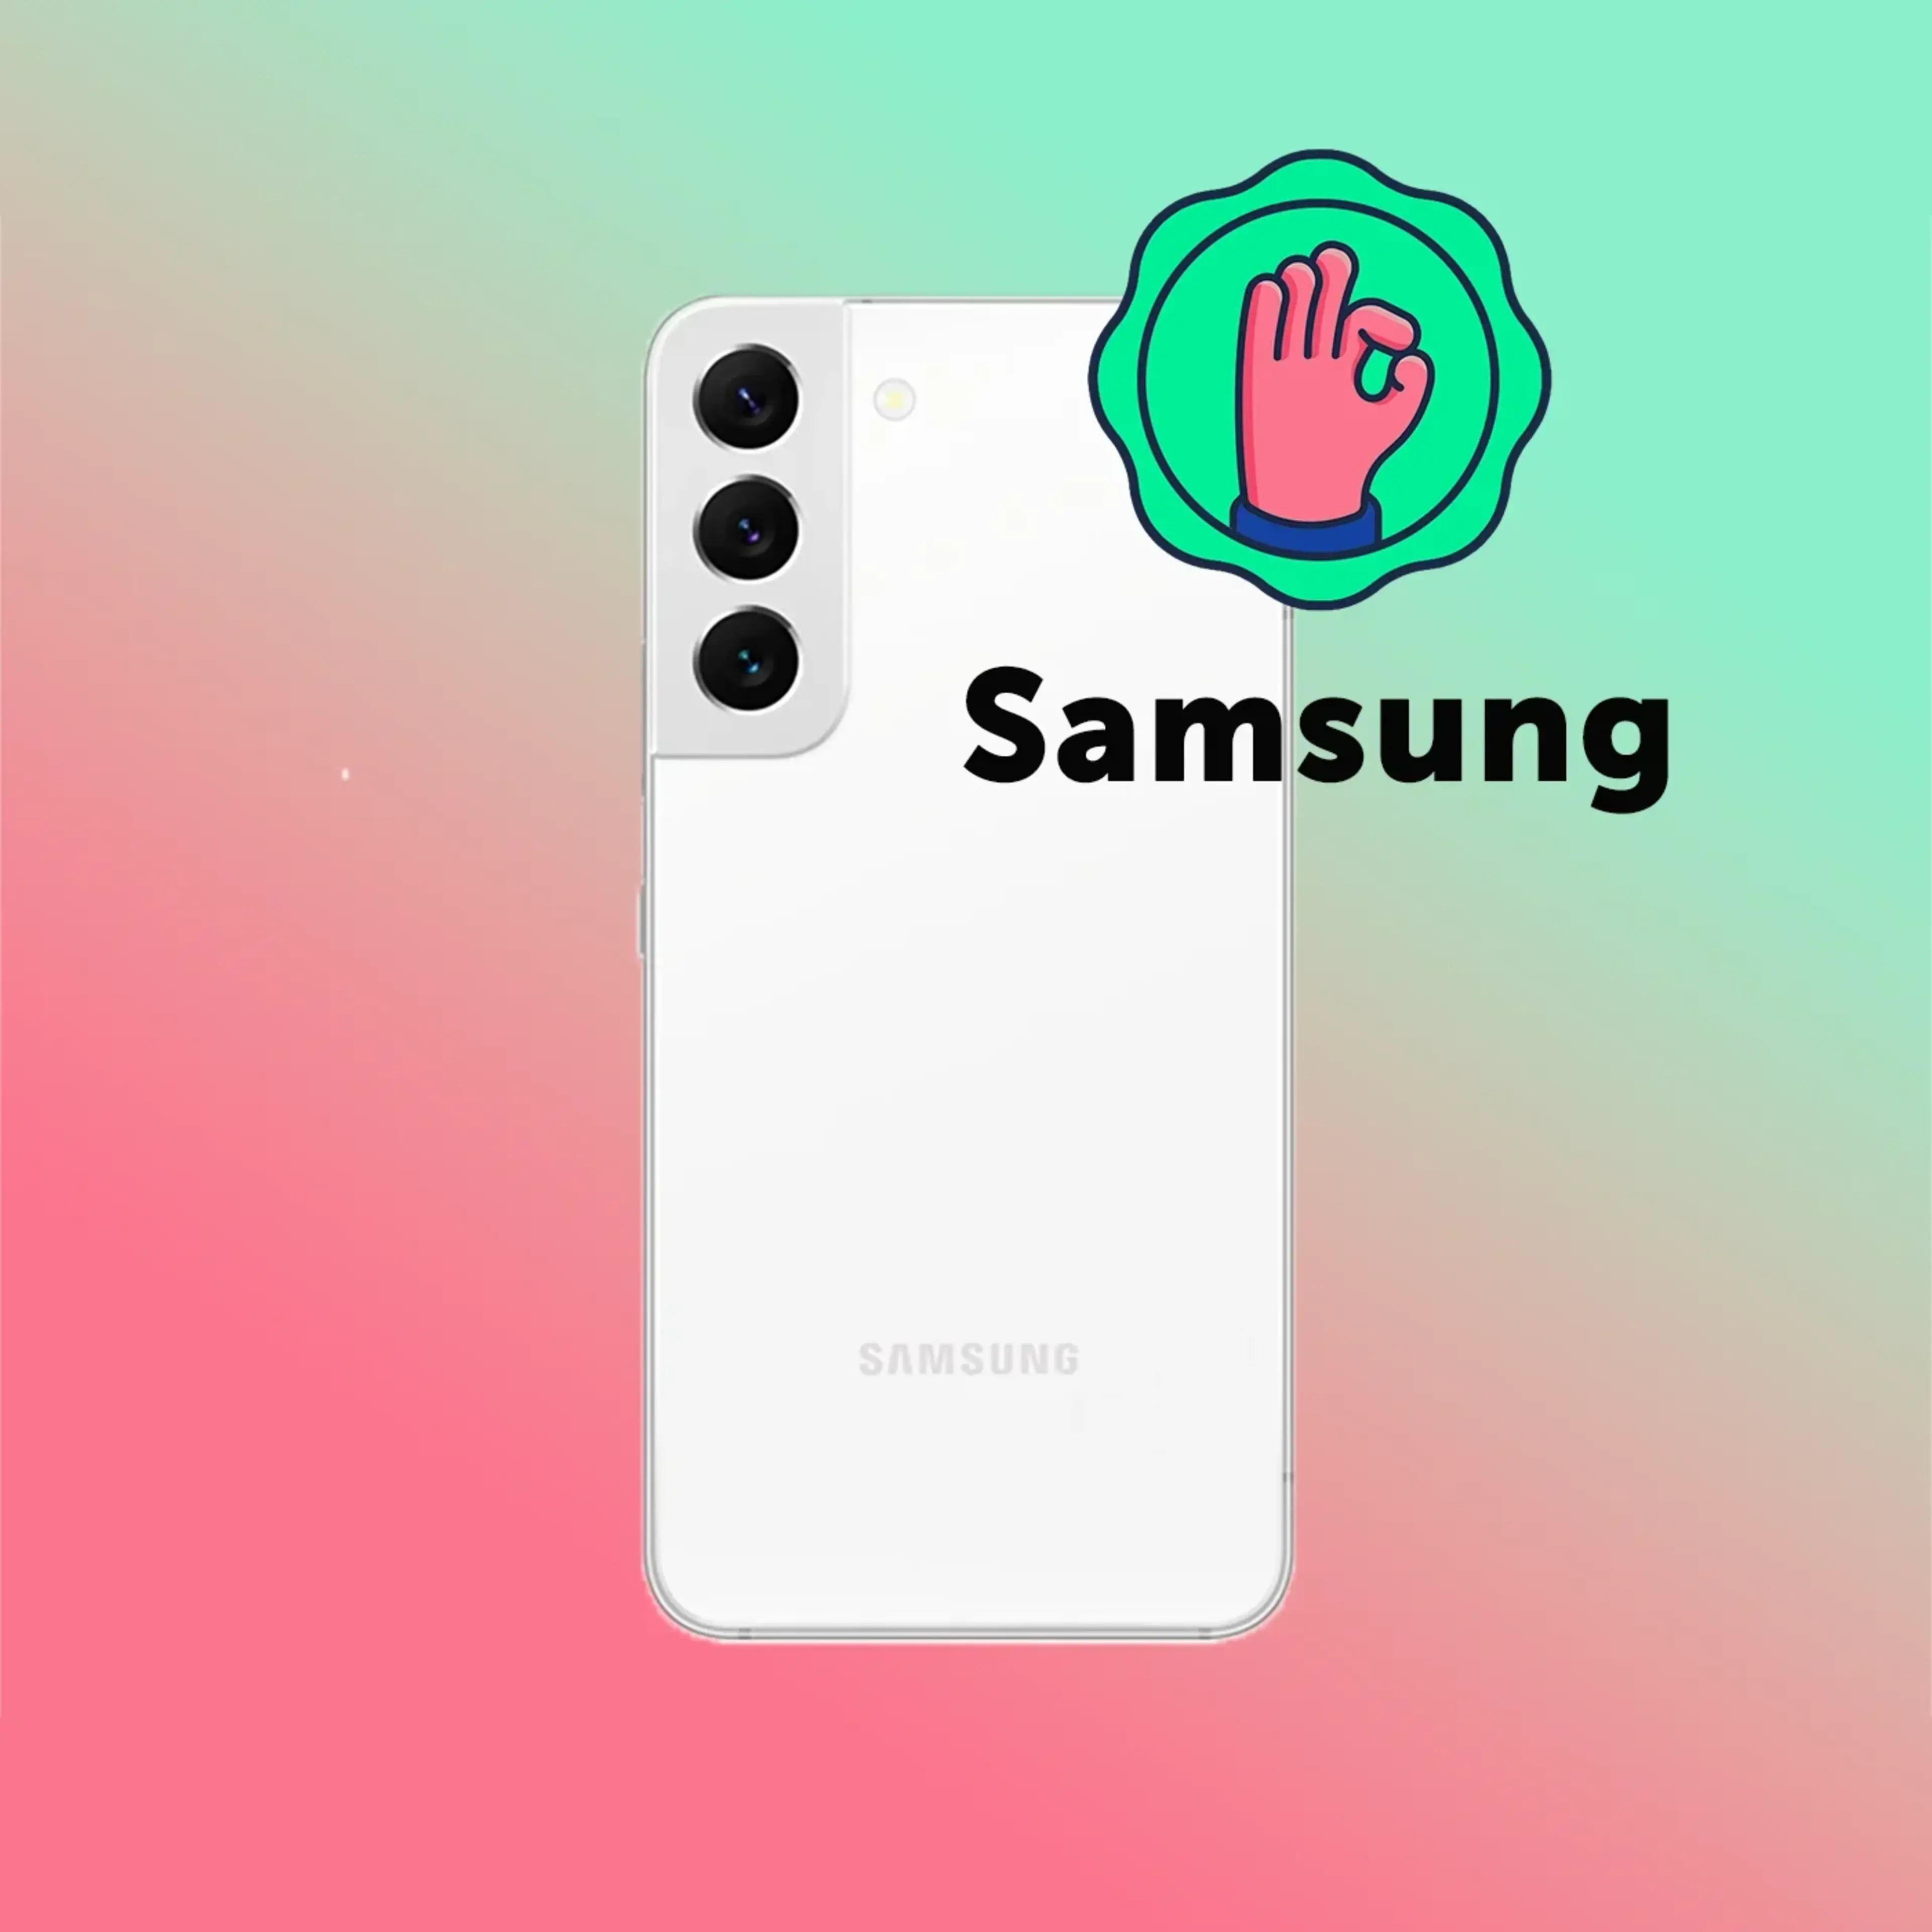 Professionellt renoverade Samsungs image